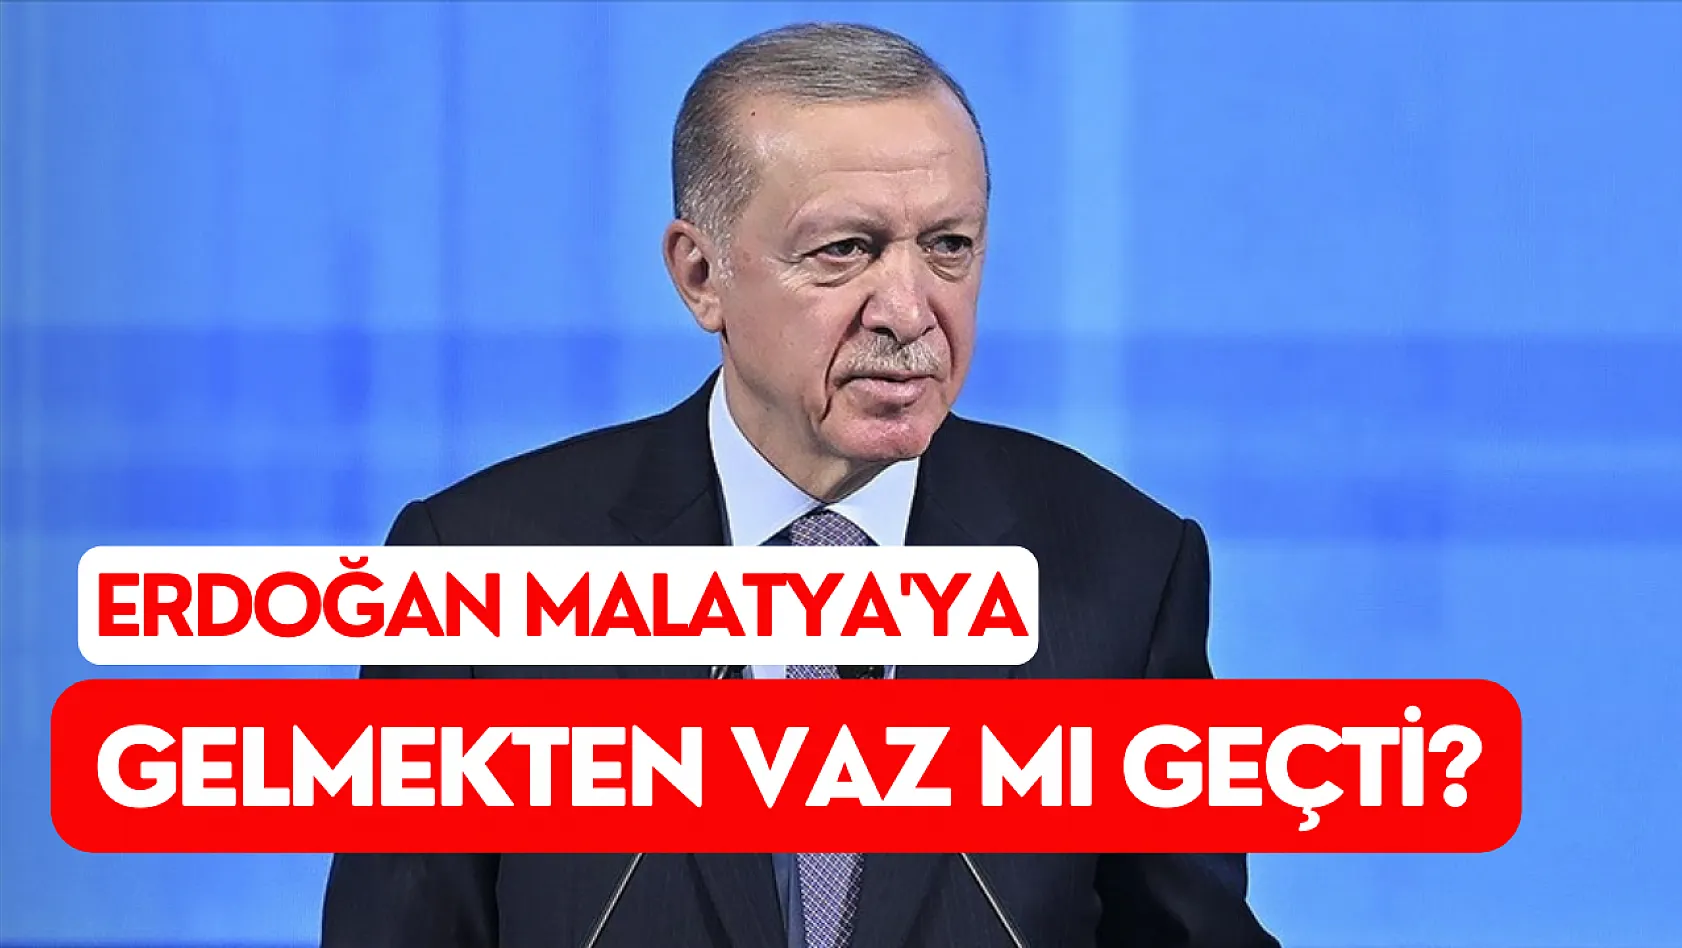 Erdoğan Malatya'ya gelmekten vaz mı geçti?